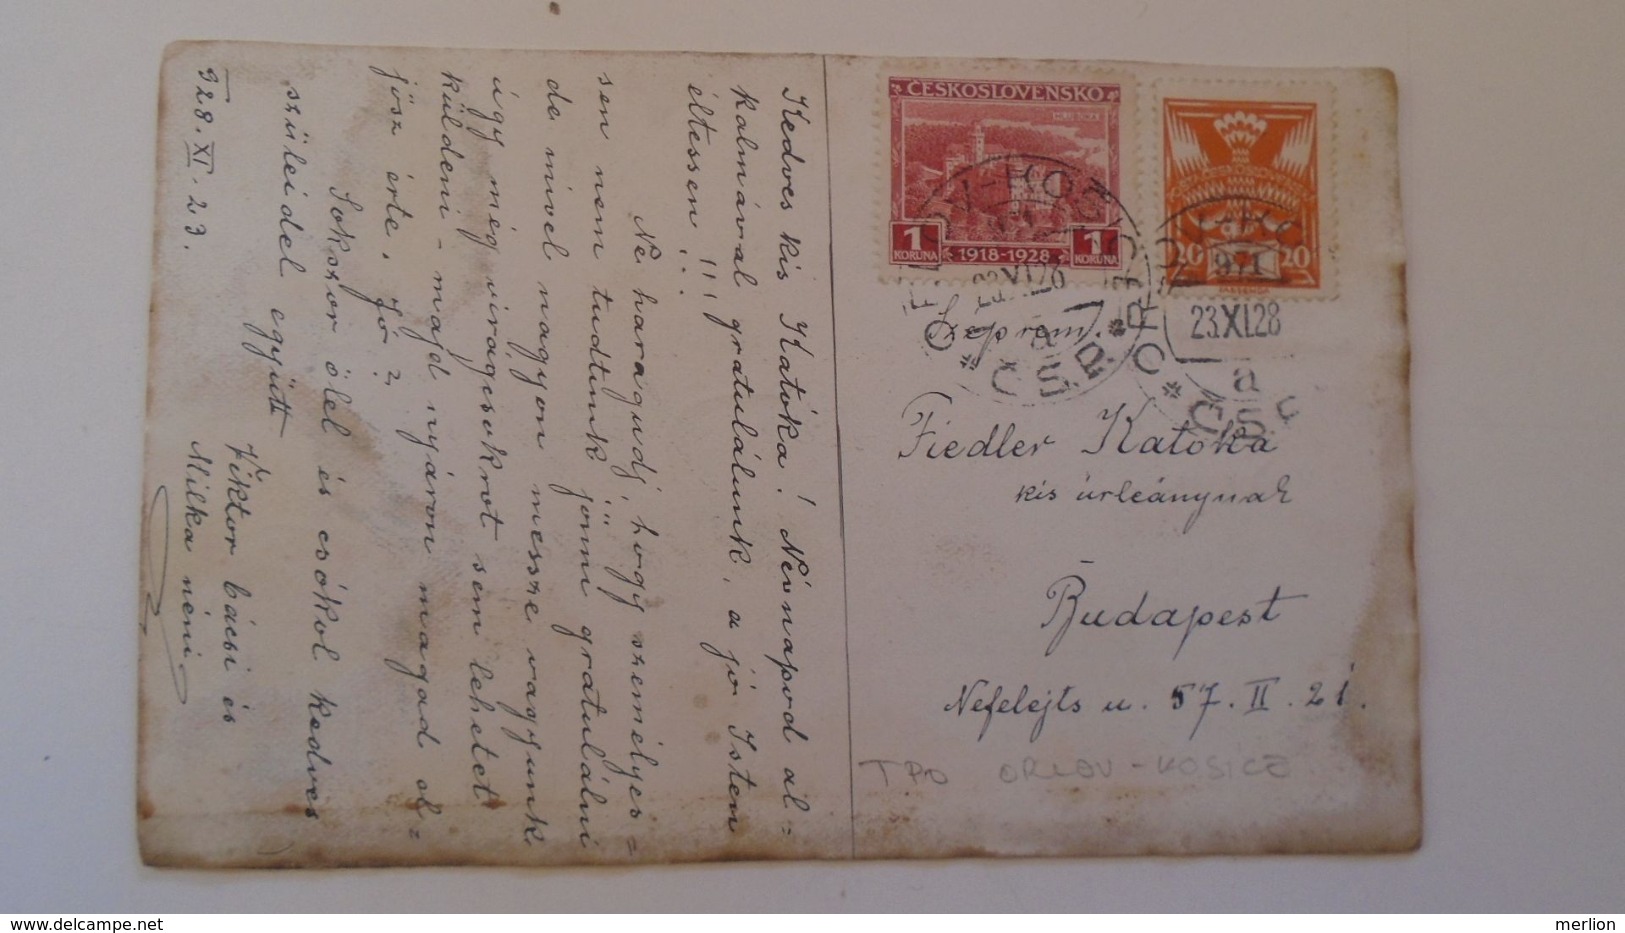 D168182  Czechoslovakia  Postcard  Zum Namenstage   TPO -Railway Post -BAHNPOST - Orlov-Kosice   1928 - Briefe U. Dokumente